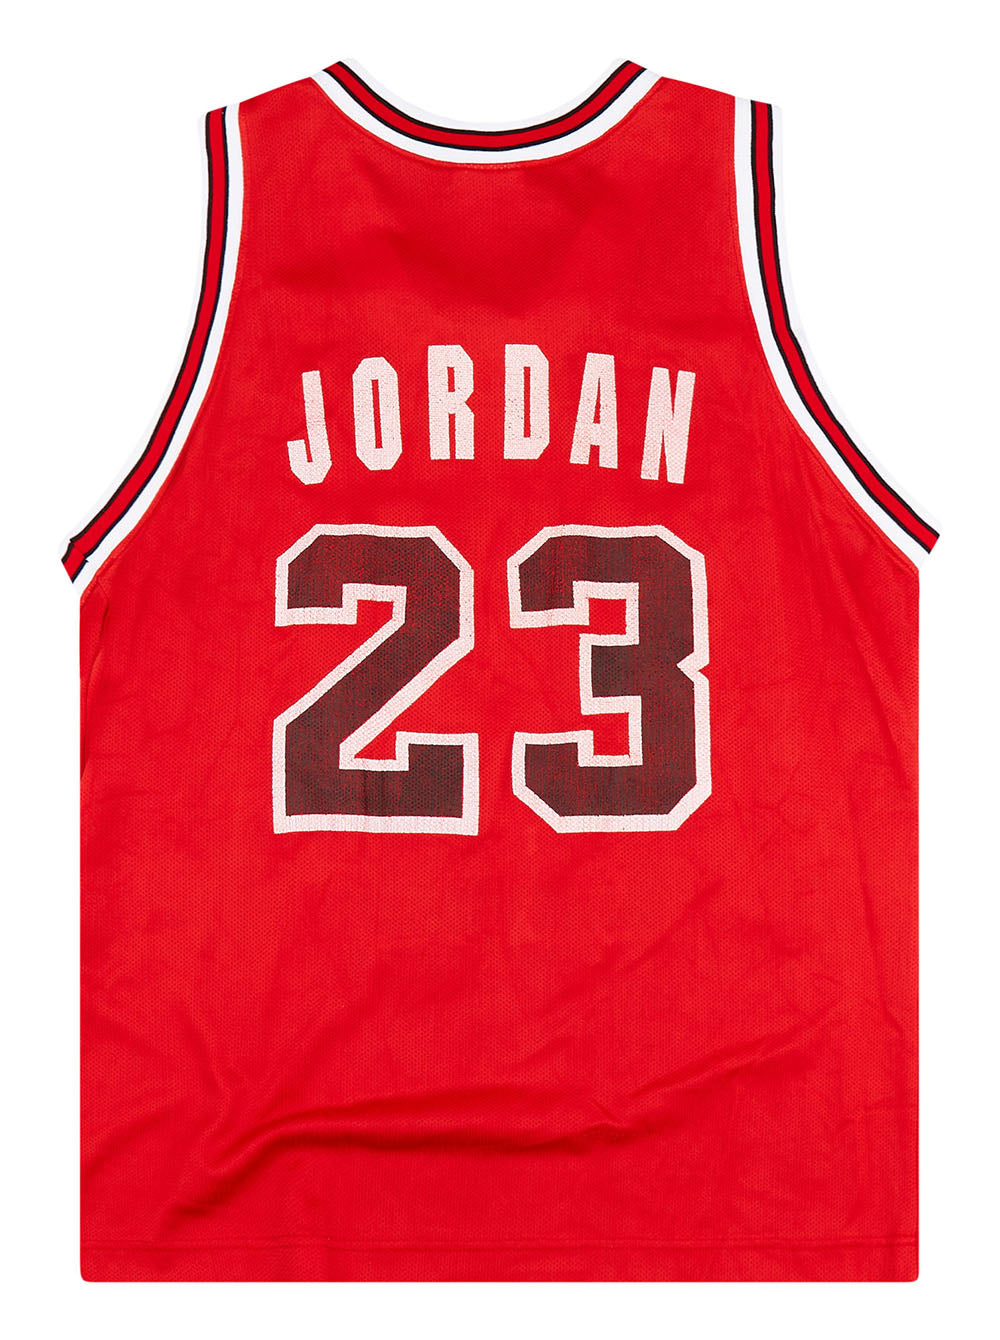 Vintage North Carolina Michael Jordan #23 Basketball Jersey